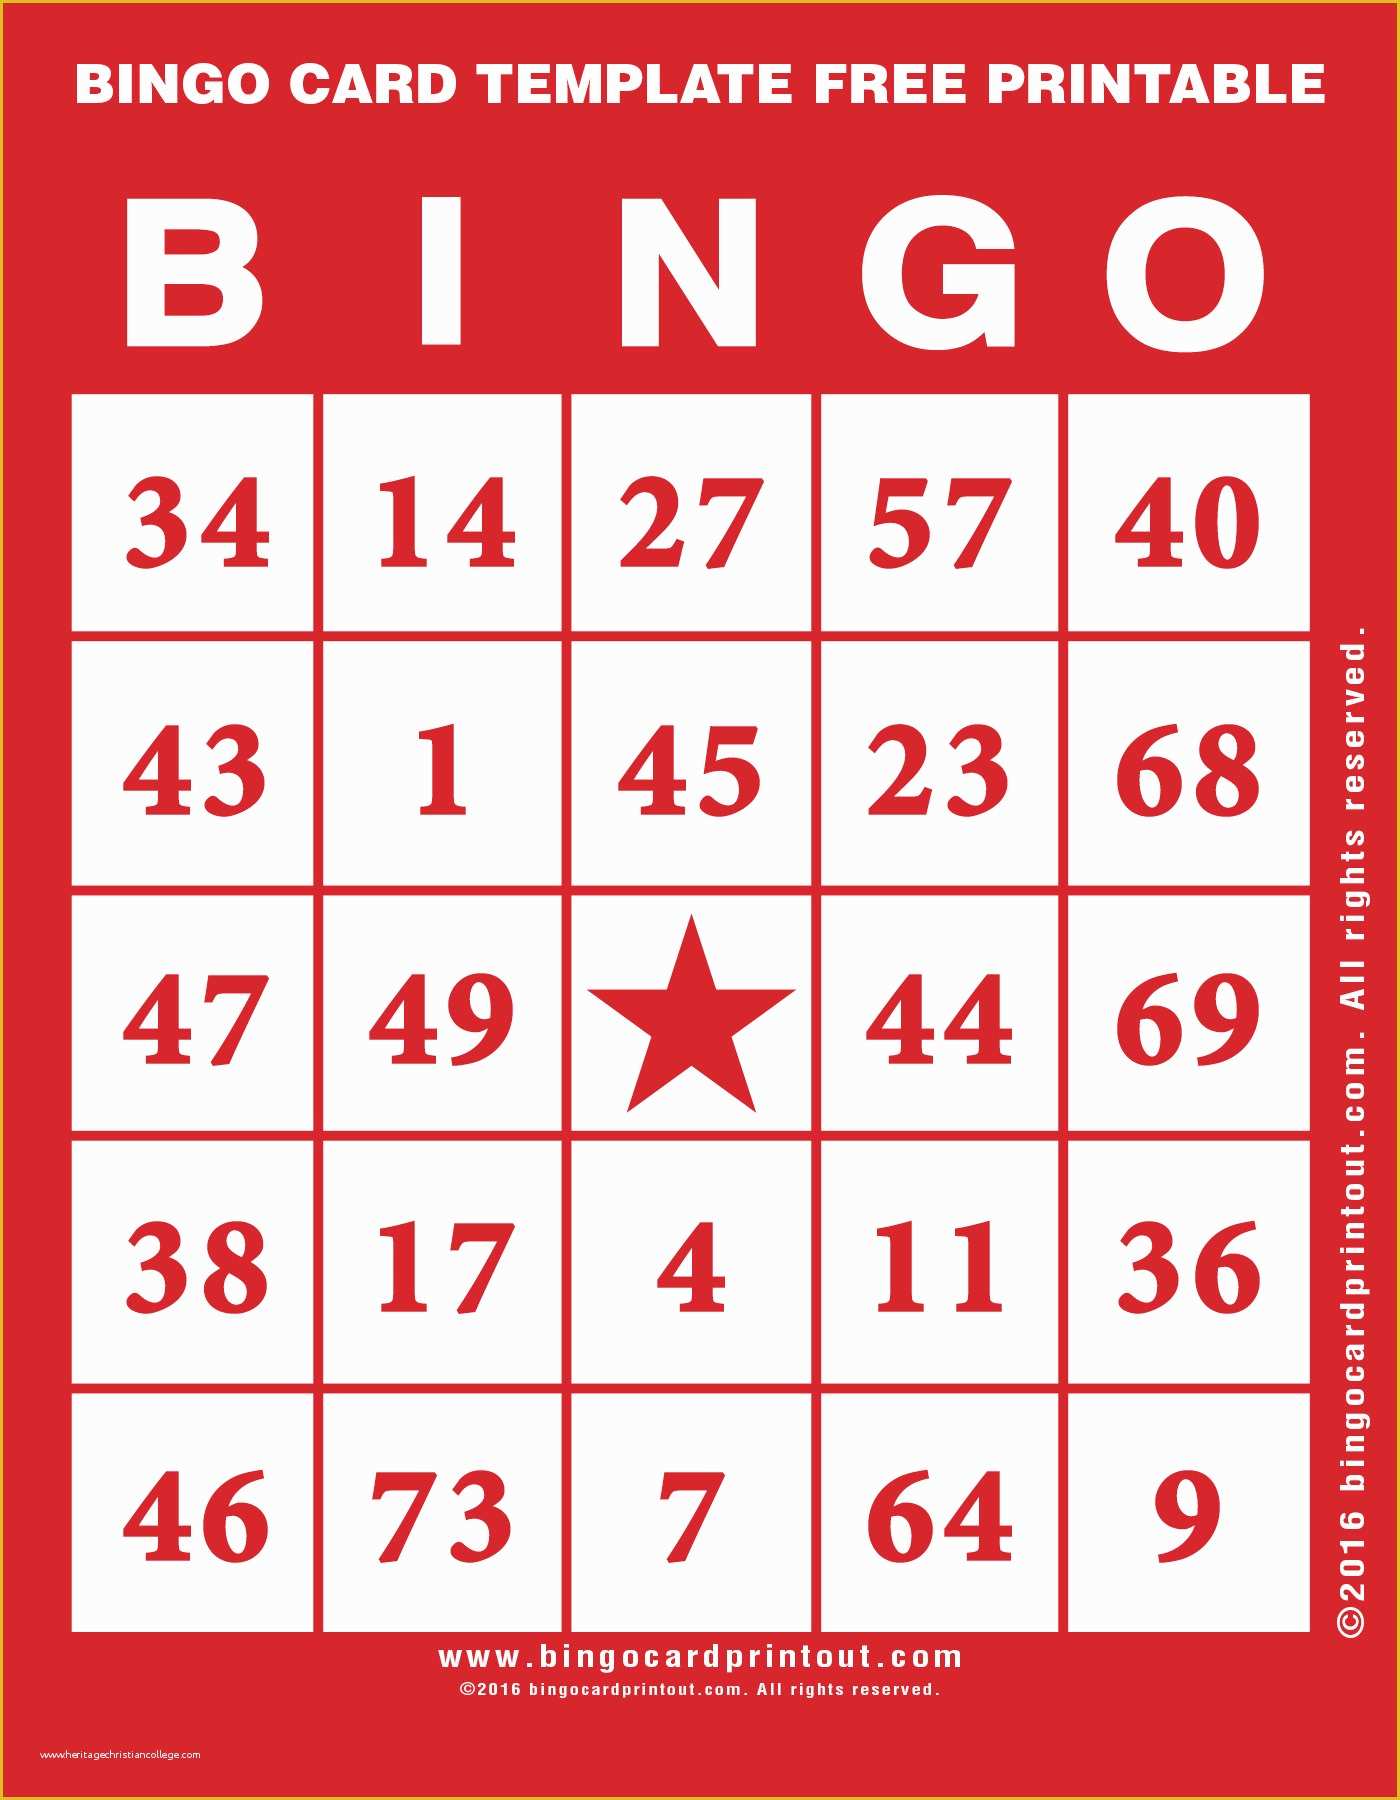 Free Photo Templates for Printing Of Bingo Card Template Free Printable Bingocardprintout